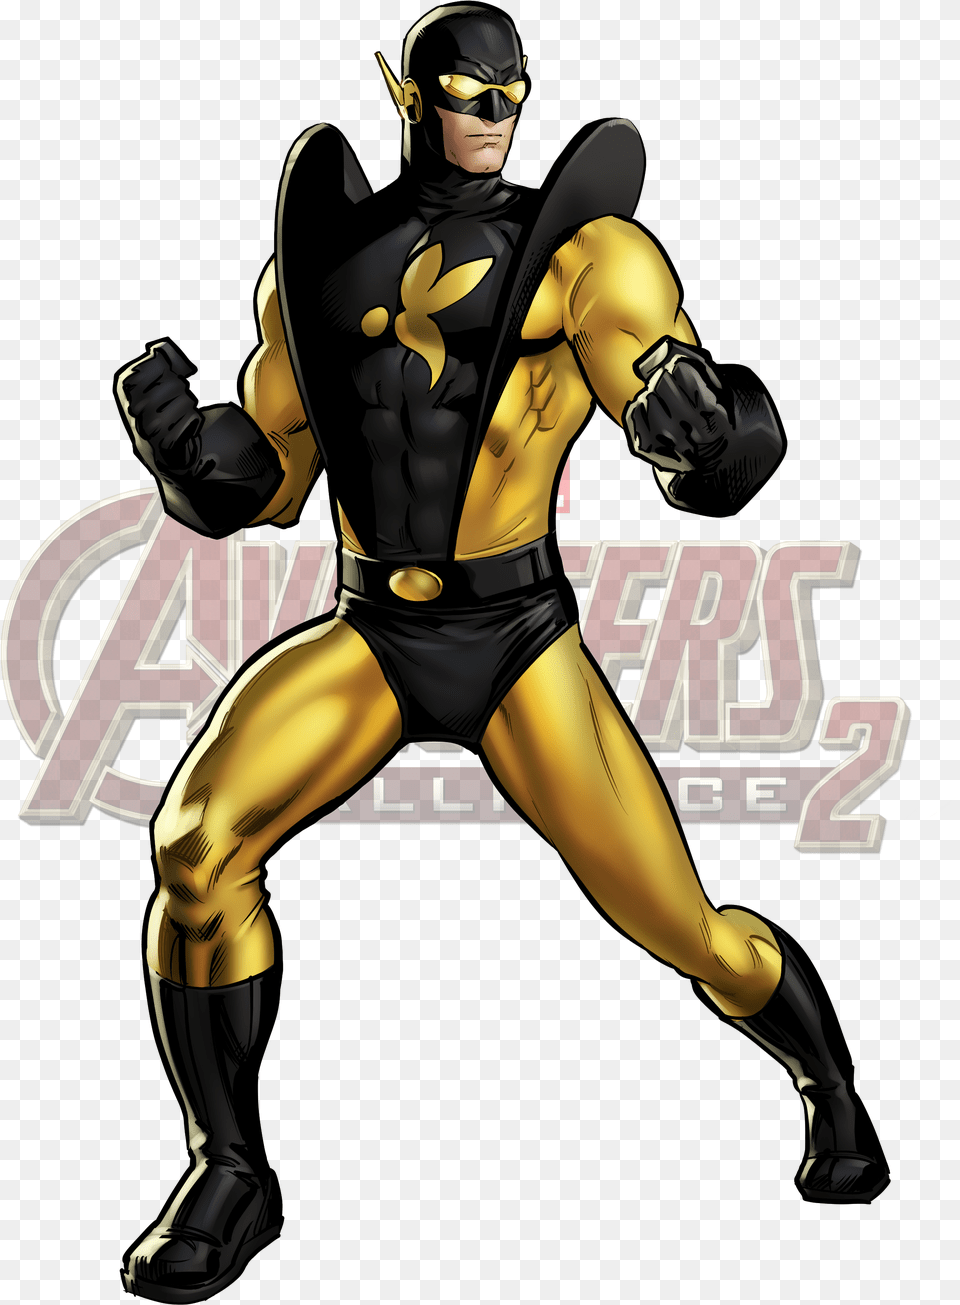 Hank Pym Avengers Comics Yellow Jacket Hank Pym, Adult, Male, Man, Person Free Transparent Png